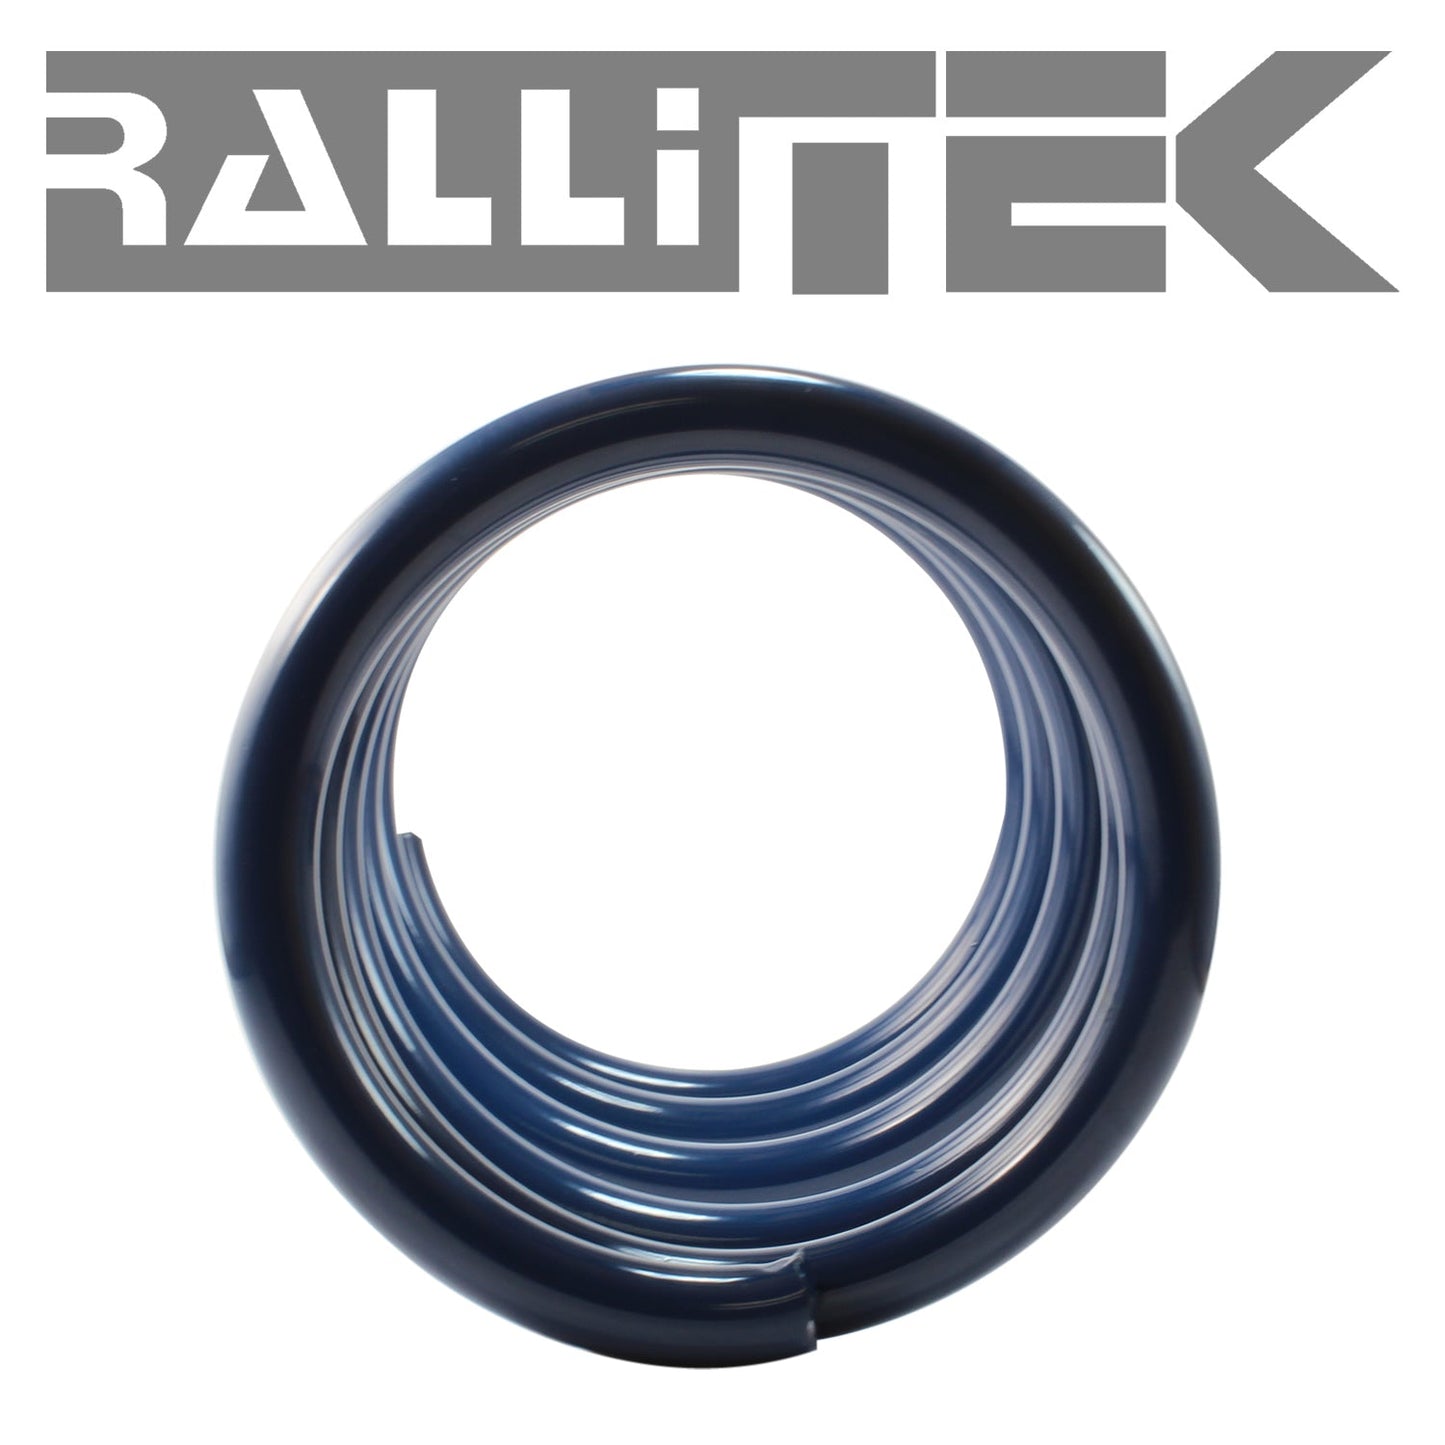 RalliTEK Front Sport Spring for the Subaru Crosstrek Inner